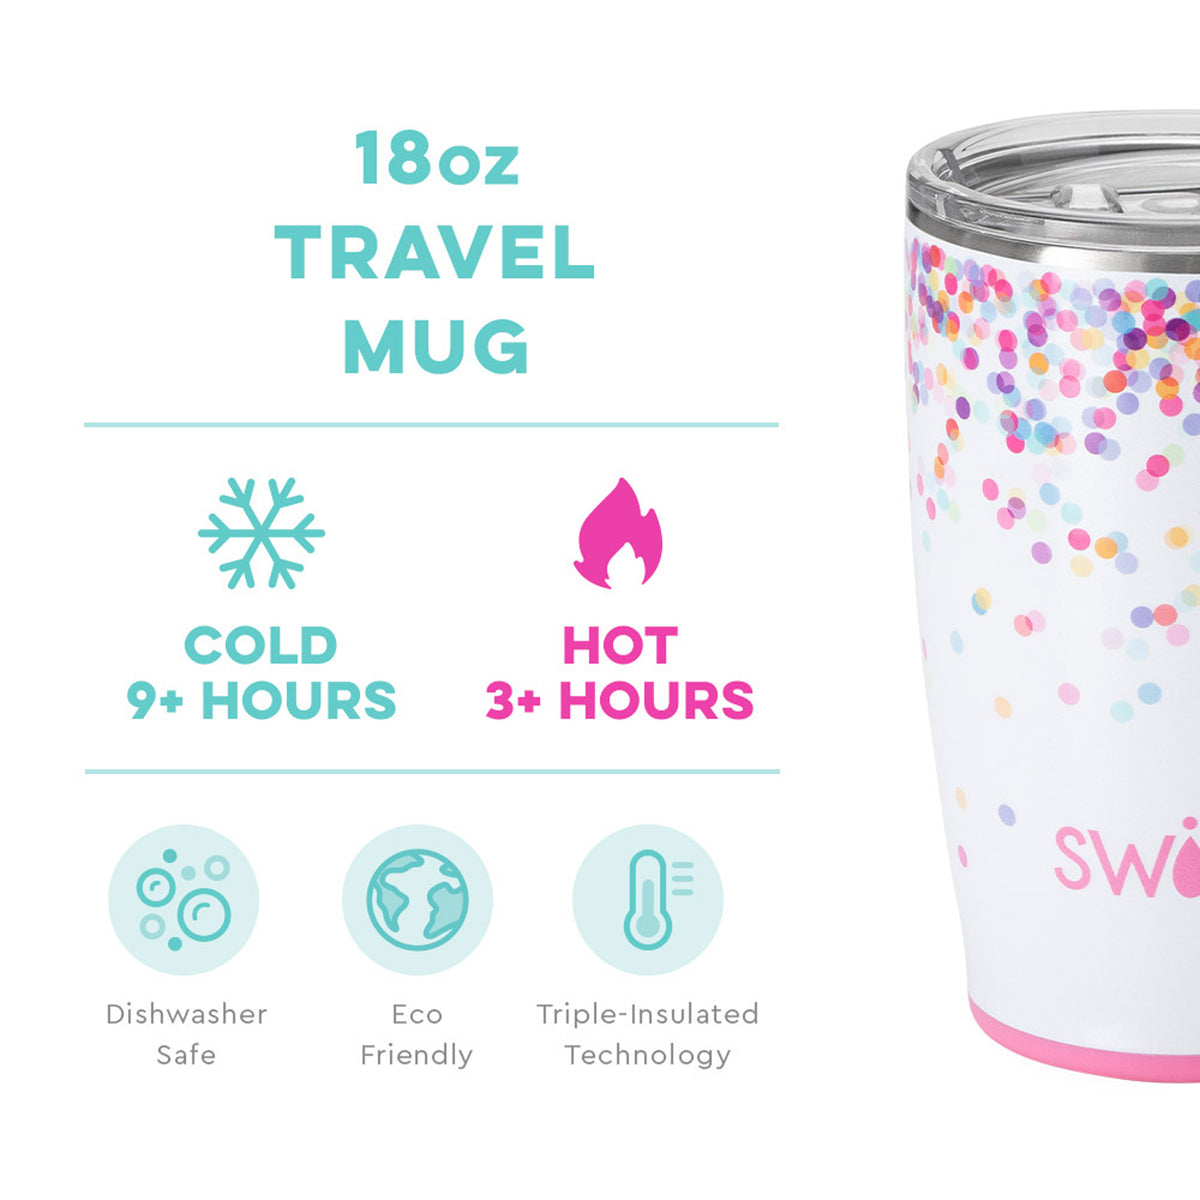 SWIG Confetti Travel Mug Stainless Steel Mug